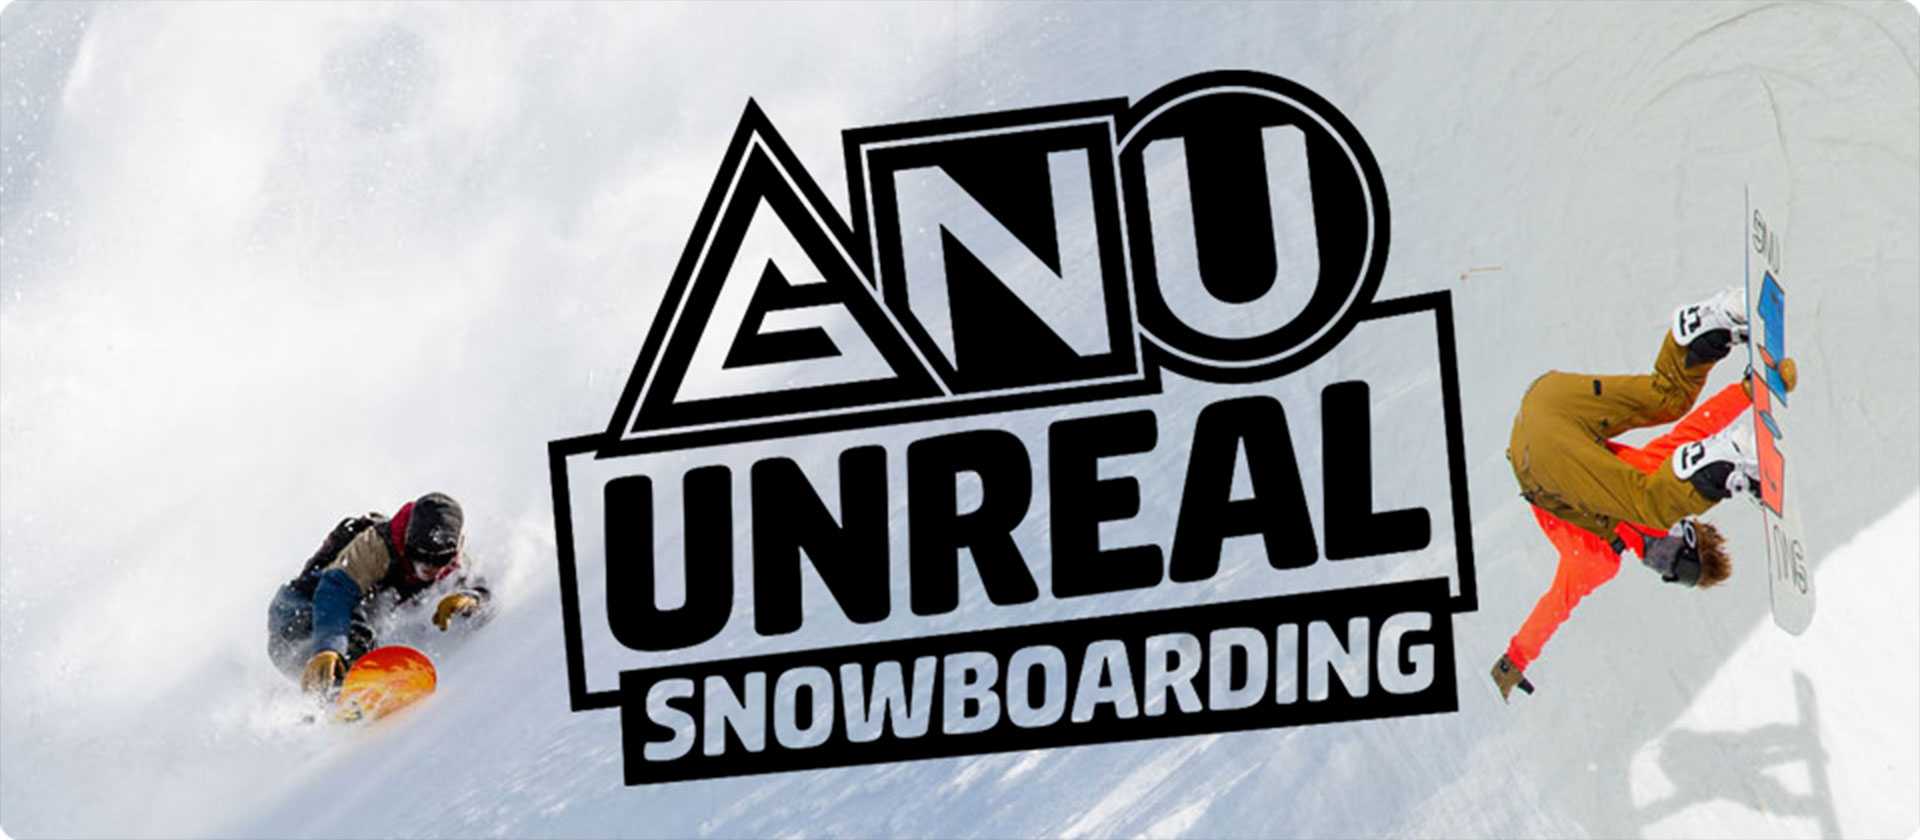 GNU Unreal Snowboarding Available at SoCal Surf Shop